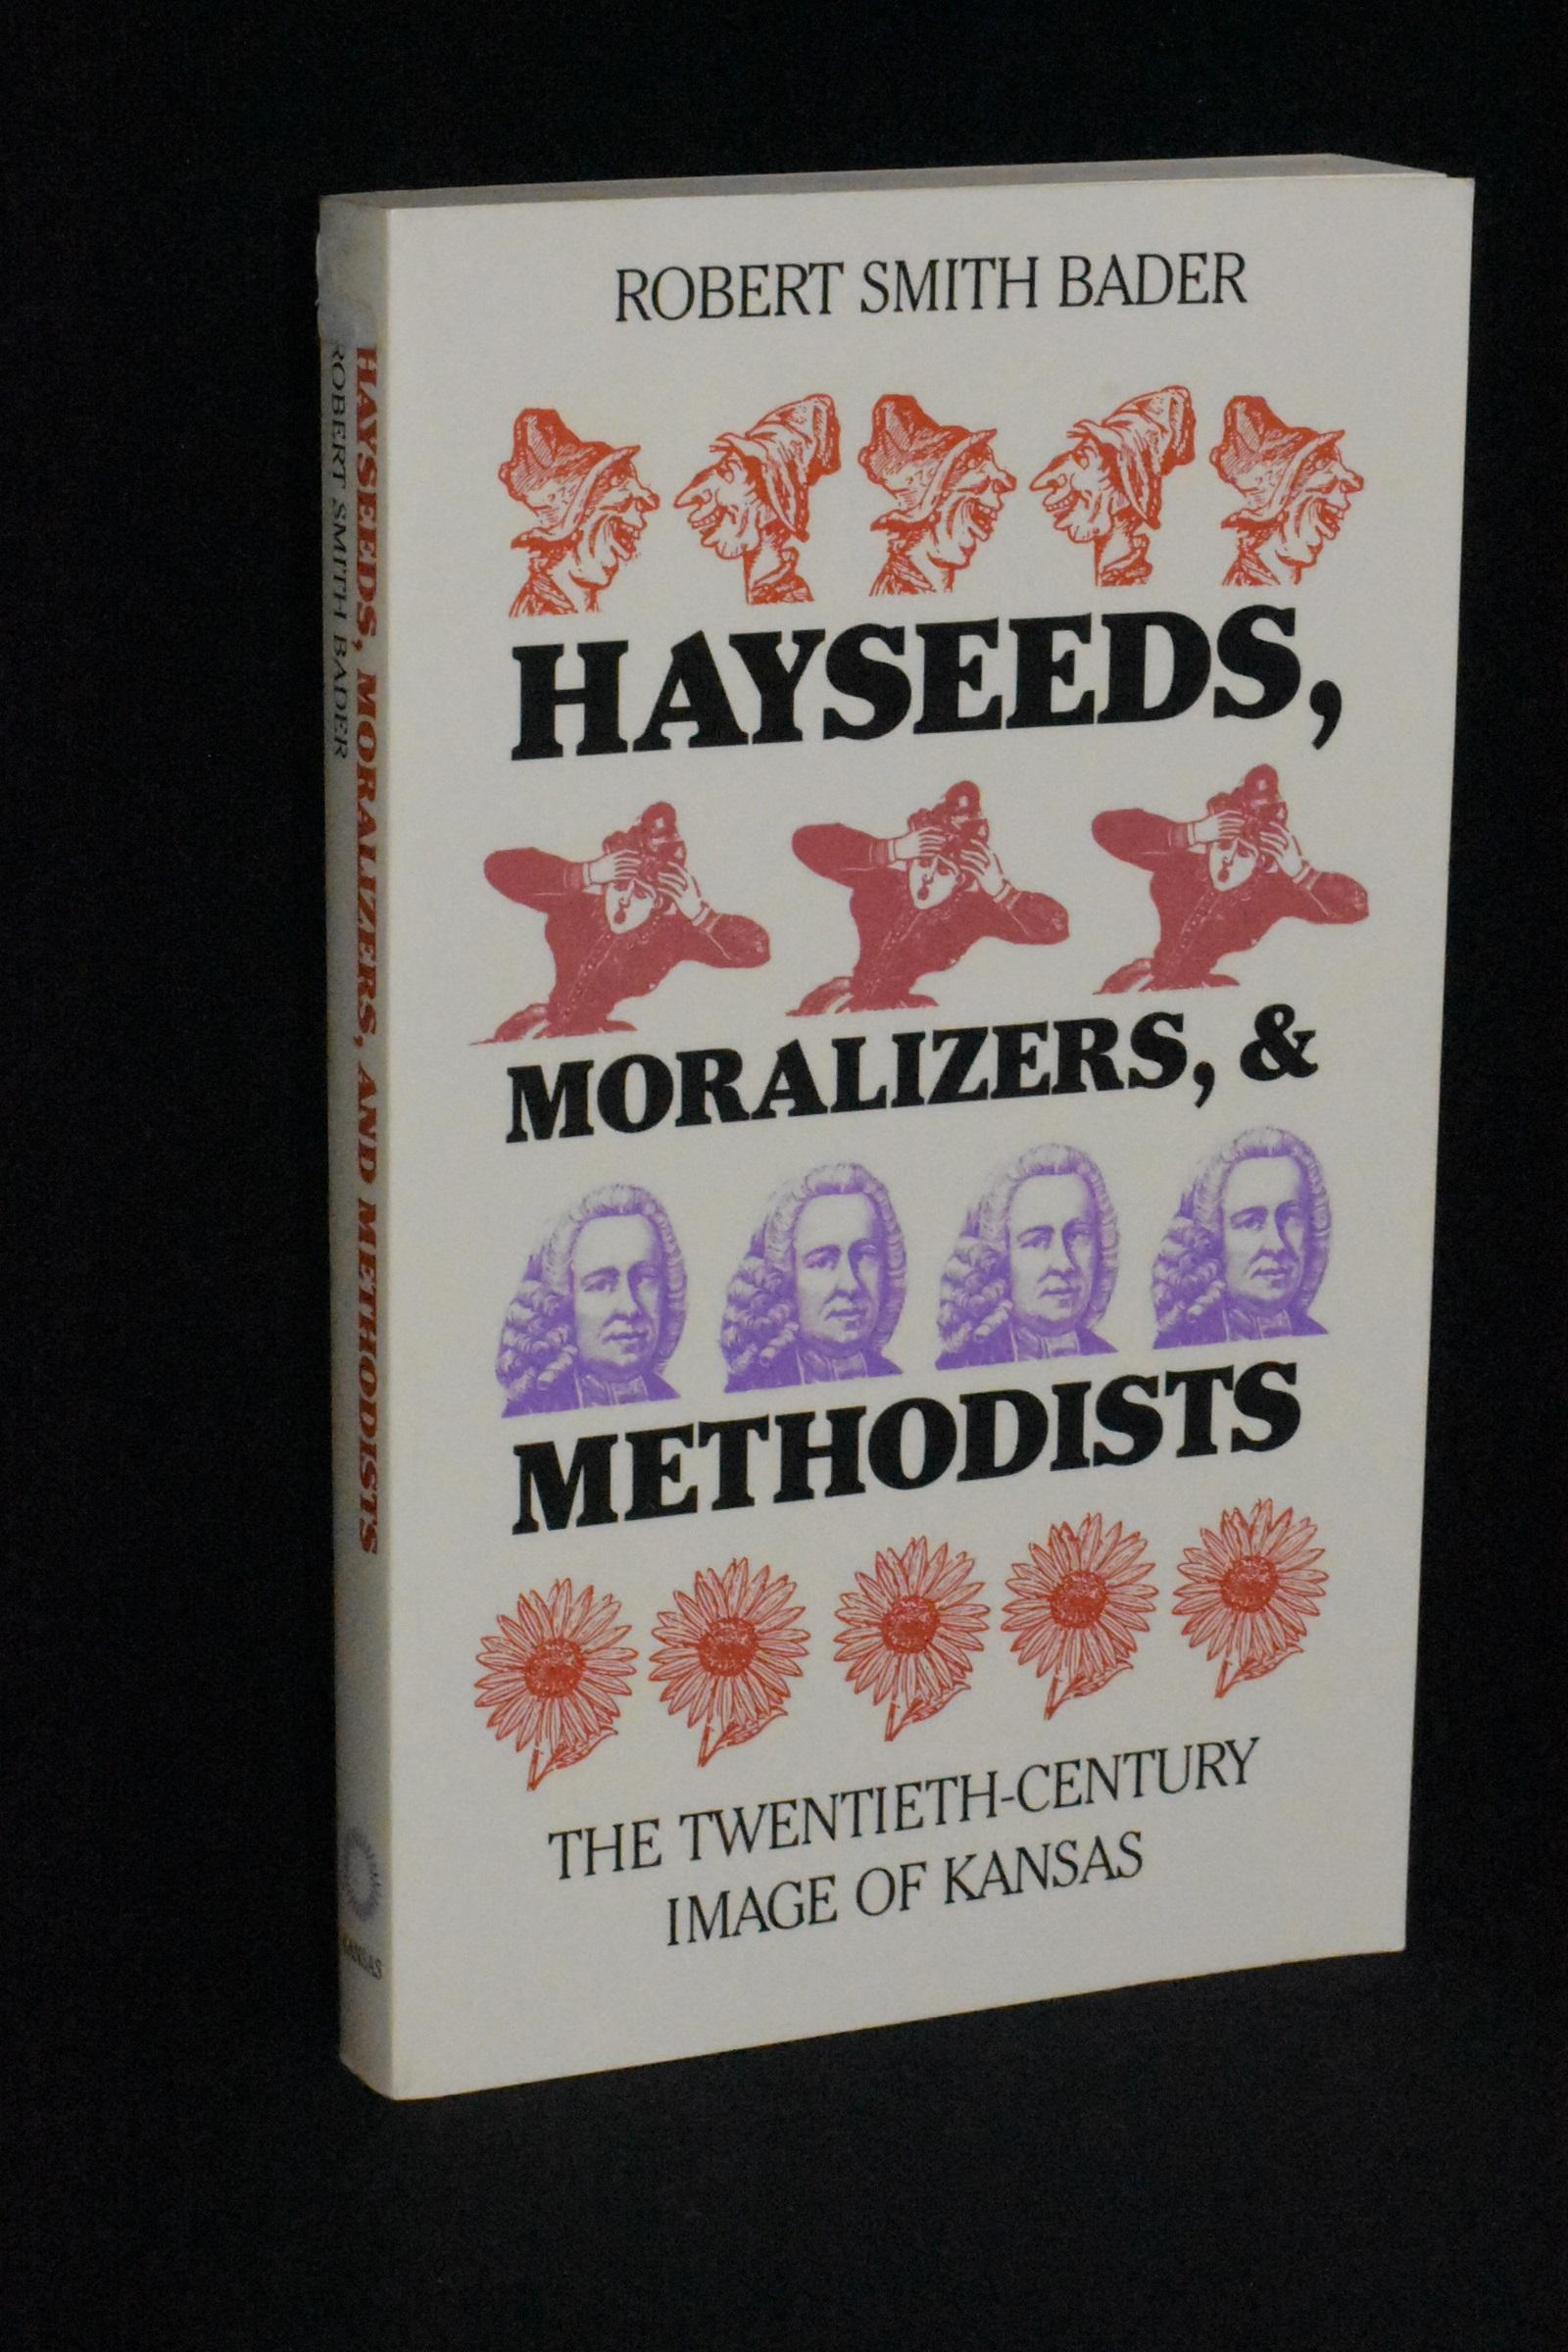 Hayseeds, Moralizers, & Methodists: The Twentieth-Century Image of Kansas - Robert Smith Bader